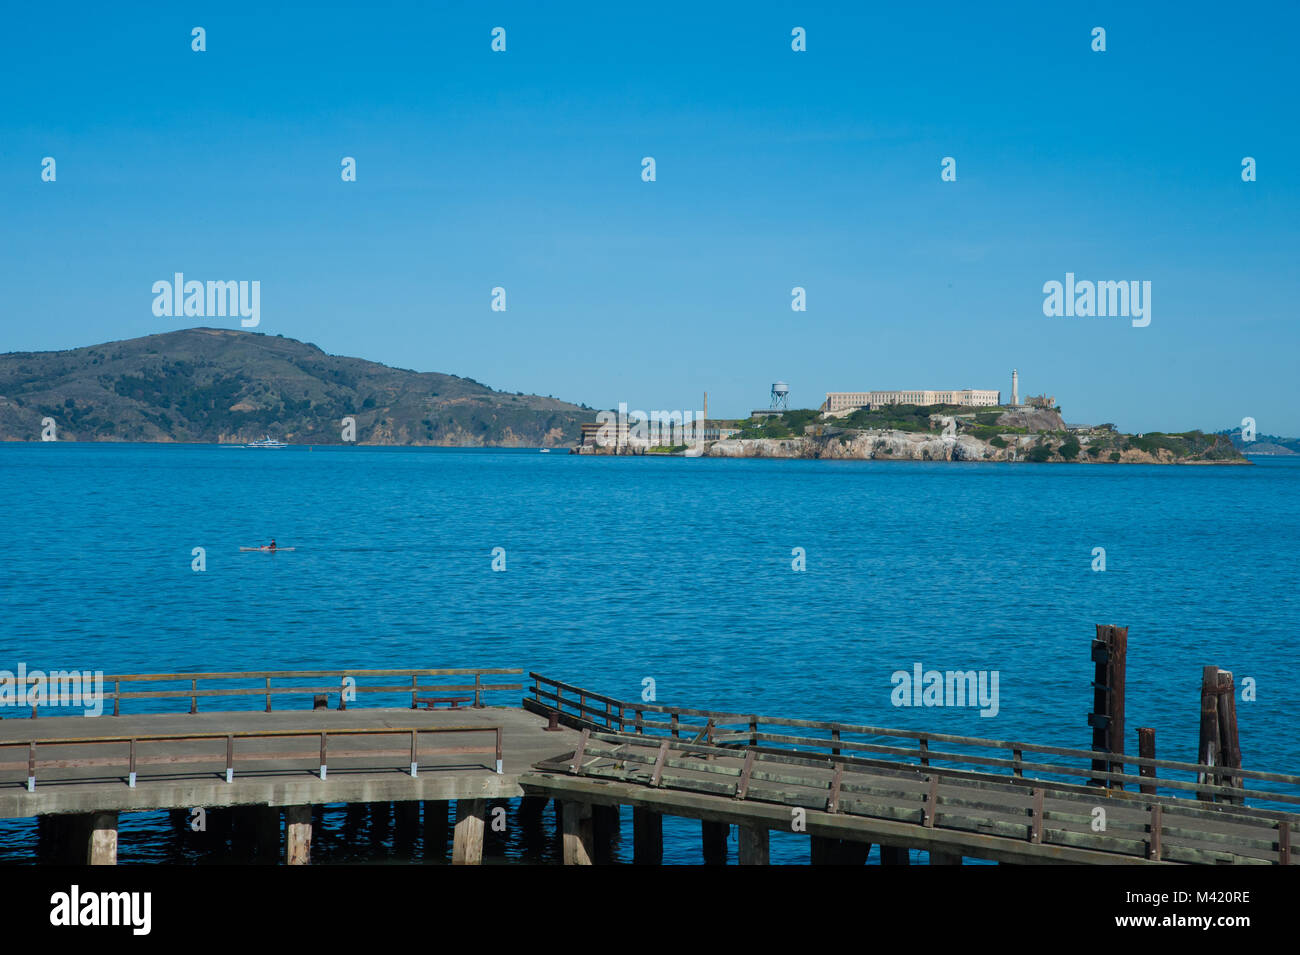 San Francisco, CA - February 03: San Francisco's Maritime National Historical Park and Aquatic Park in San Francisco Bay Stock Photo